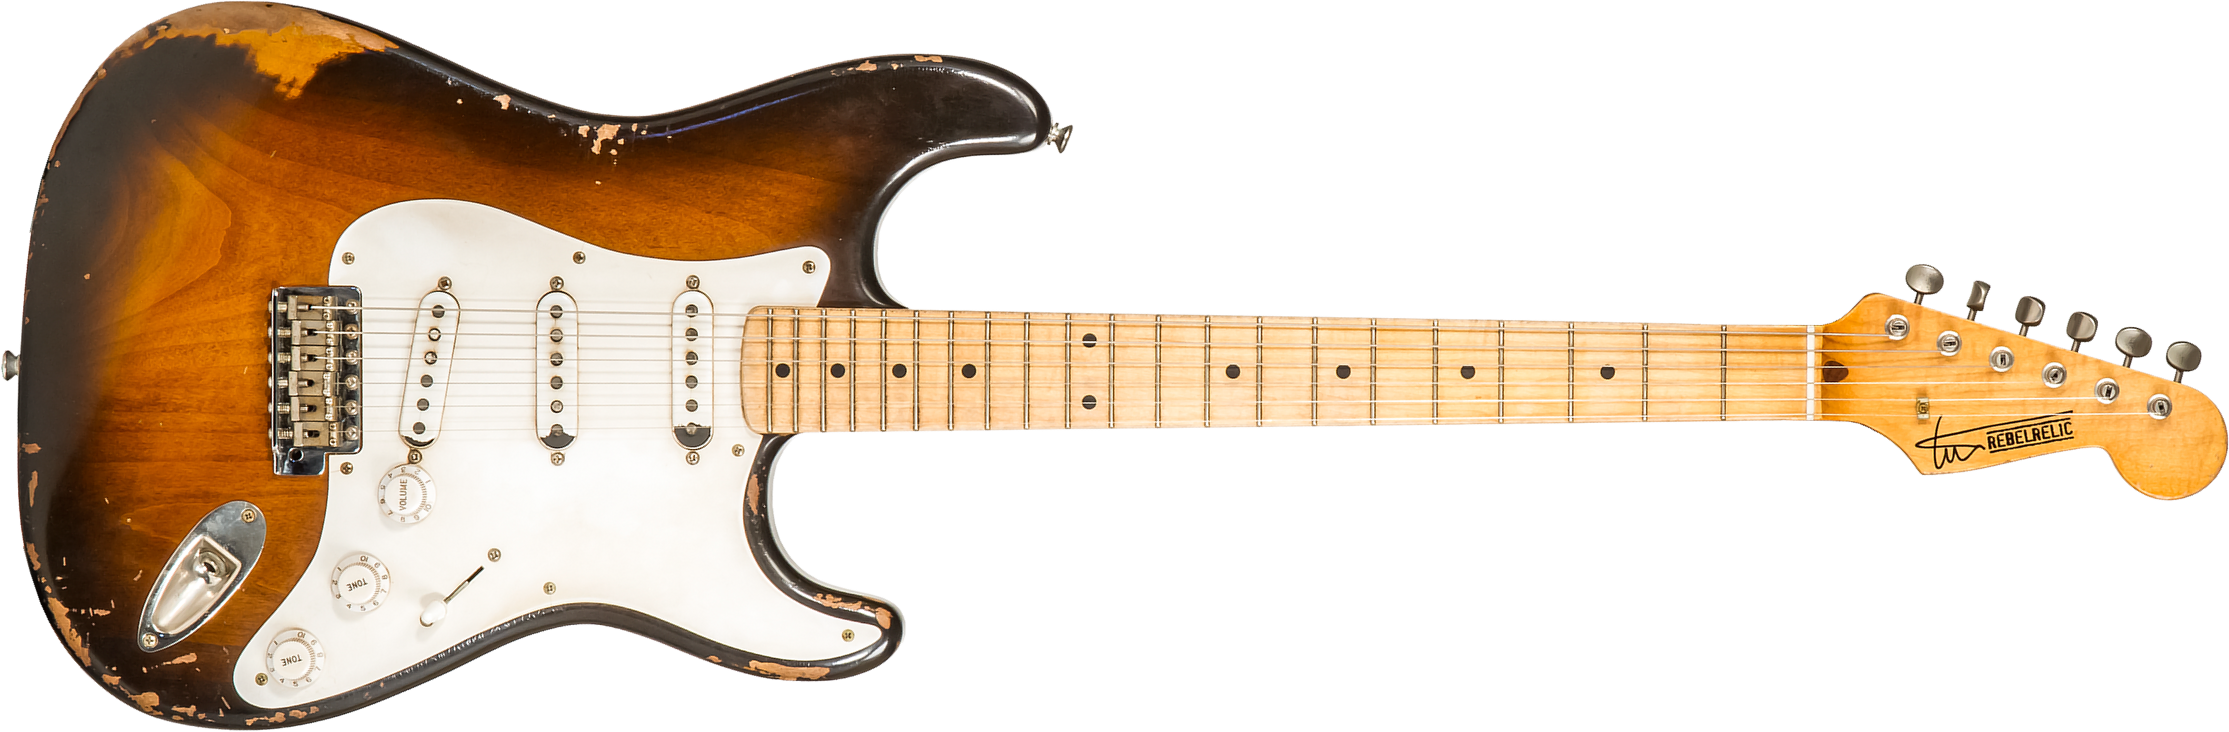 Rebelrelic S-series 54 3s Trem Mn #230103 - Medium Aged 2-tone Sunburst - Str shape electric guitar - Main picture